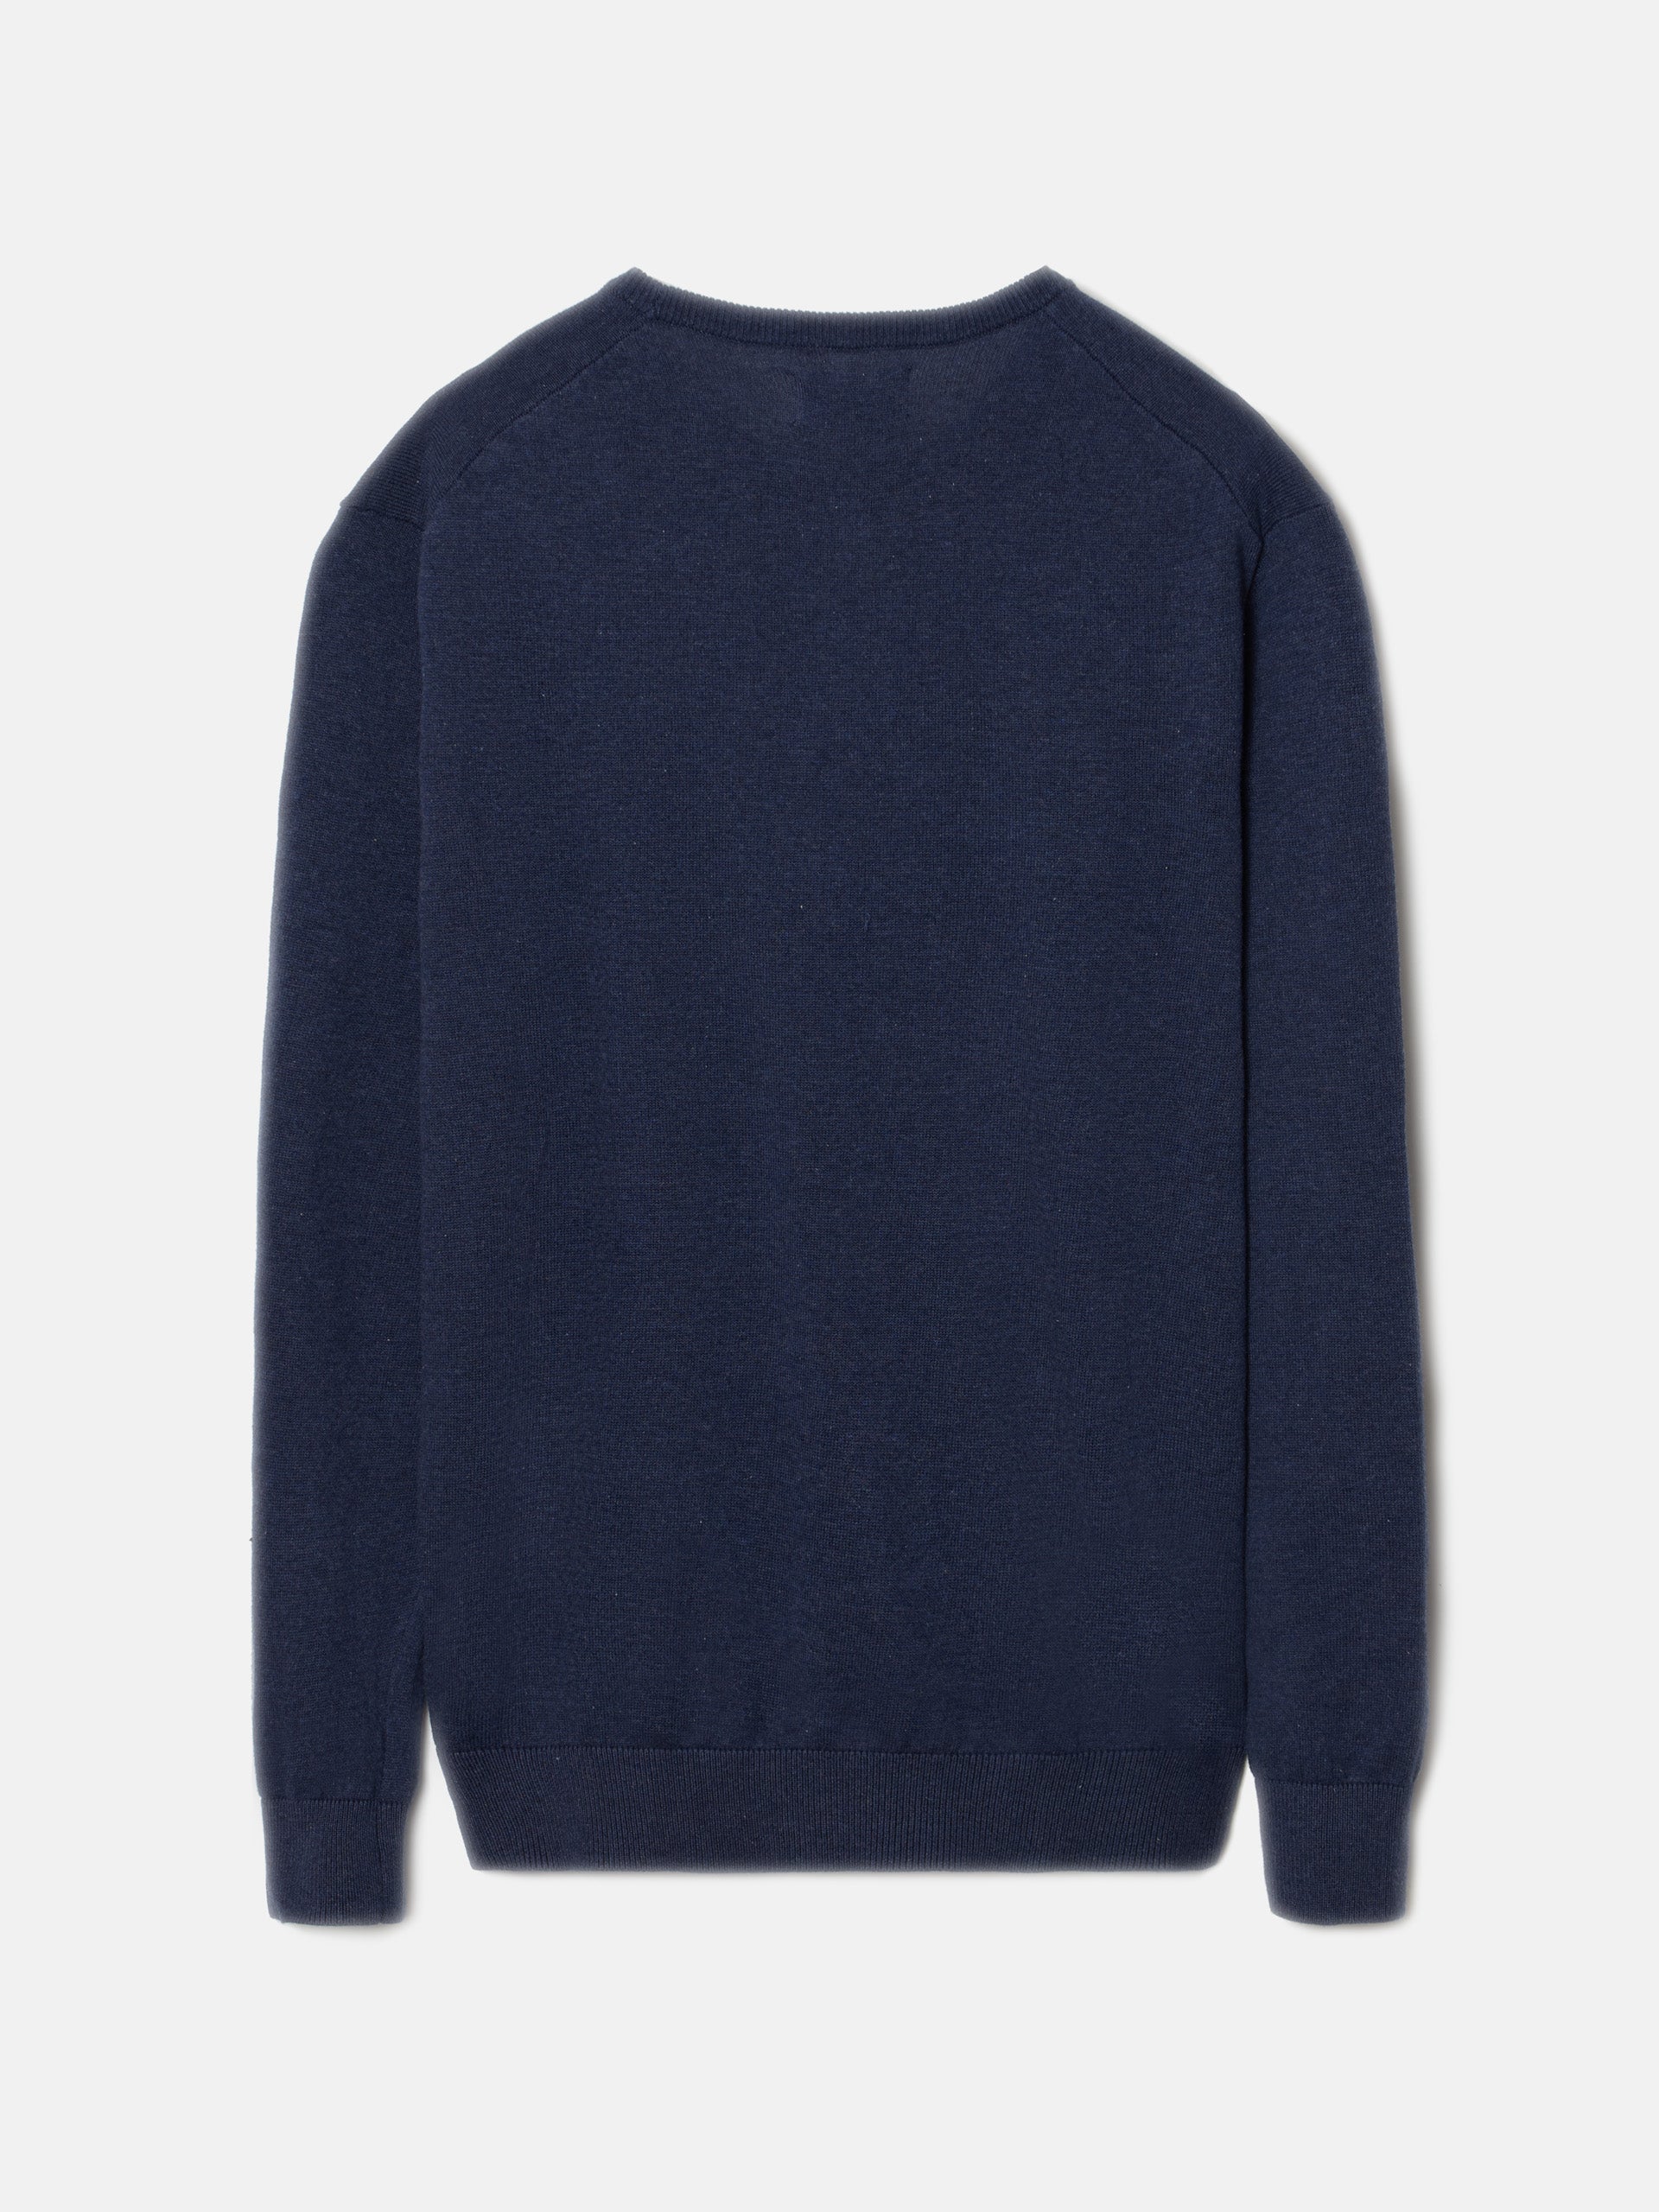 Medium blue round neck sweater